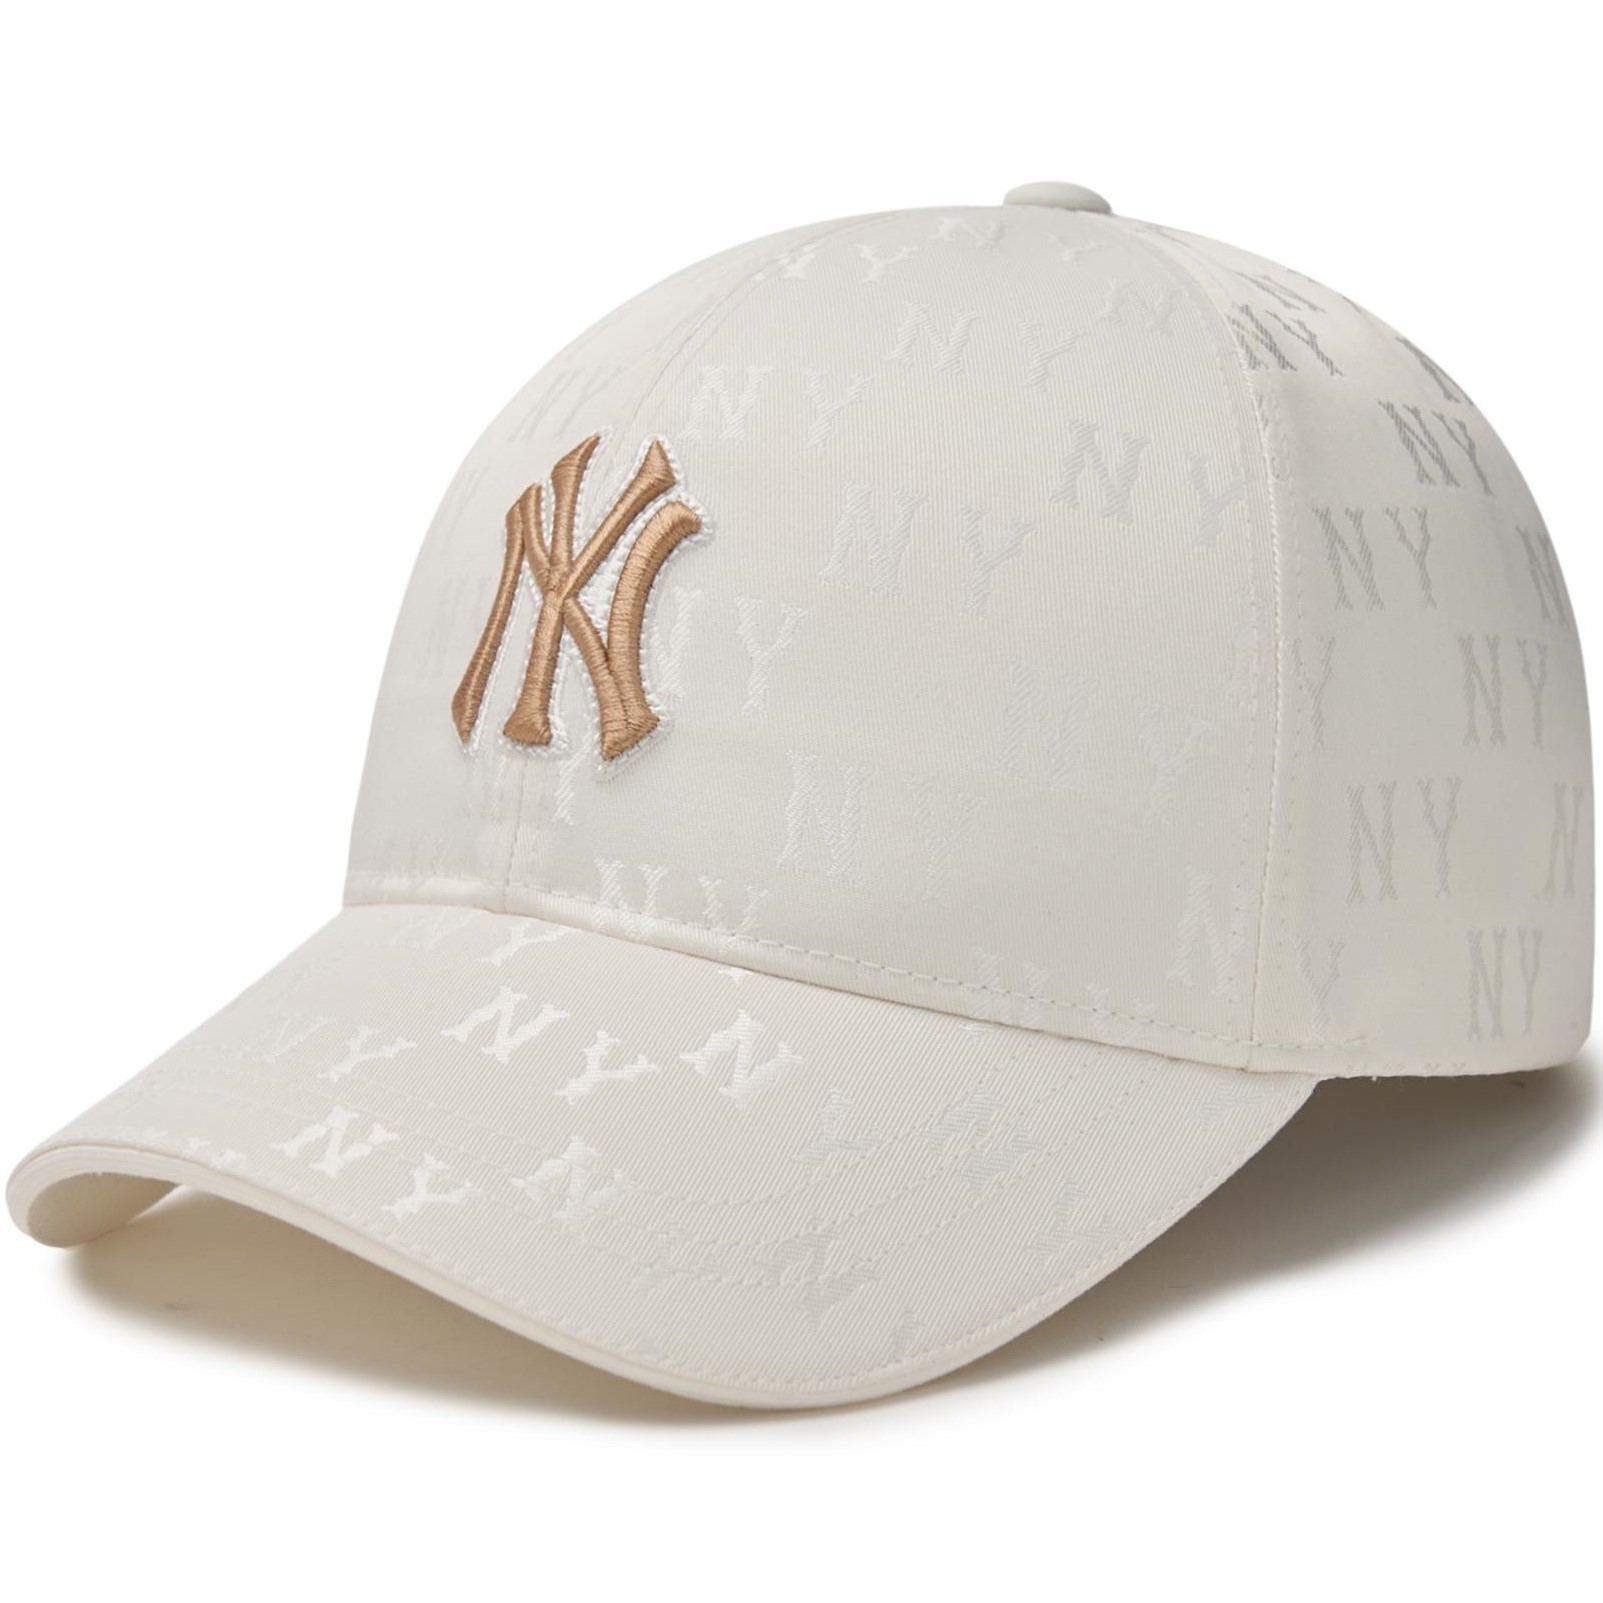 NÓN MLB CLASSIC MONOGRAM STRUCTURED BALL CAP NEW YORK YANKEES BEIGE 3ACPM014N-50CRS 9